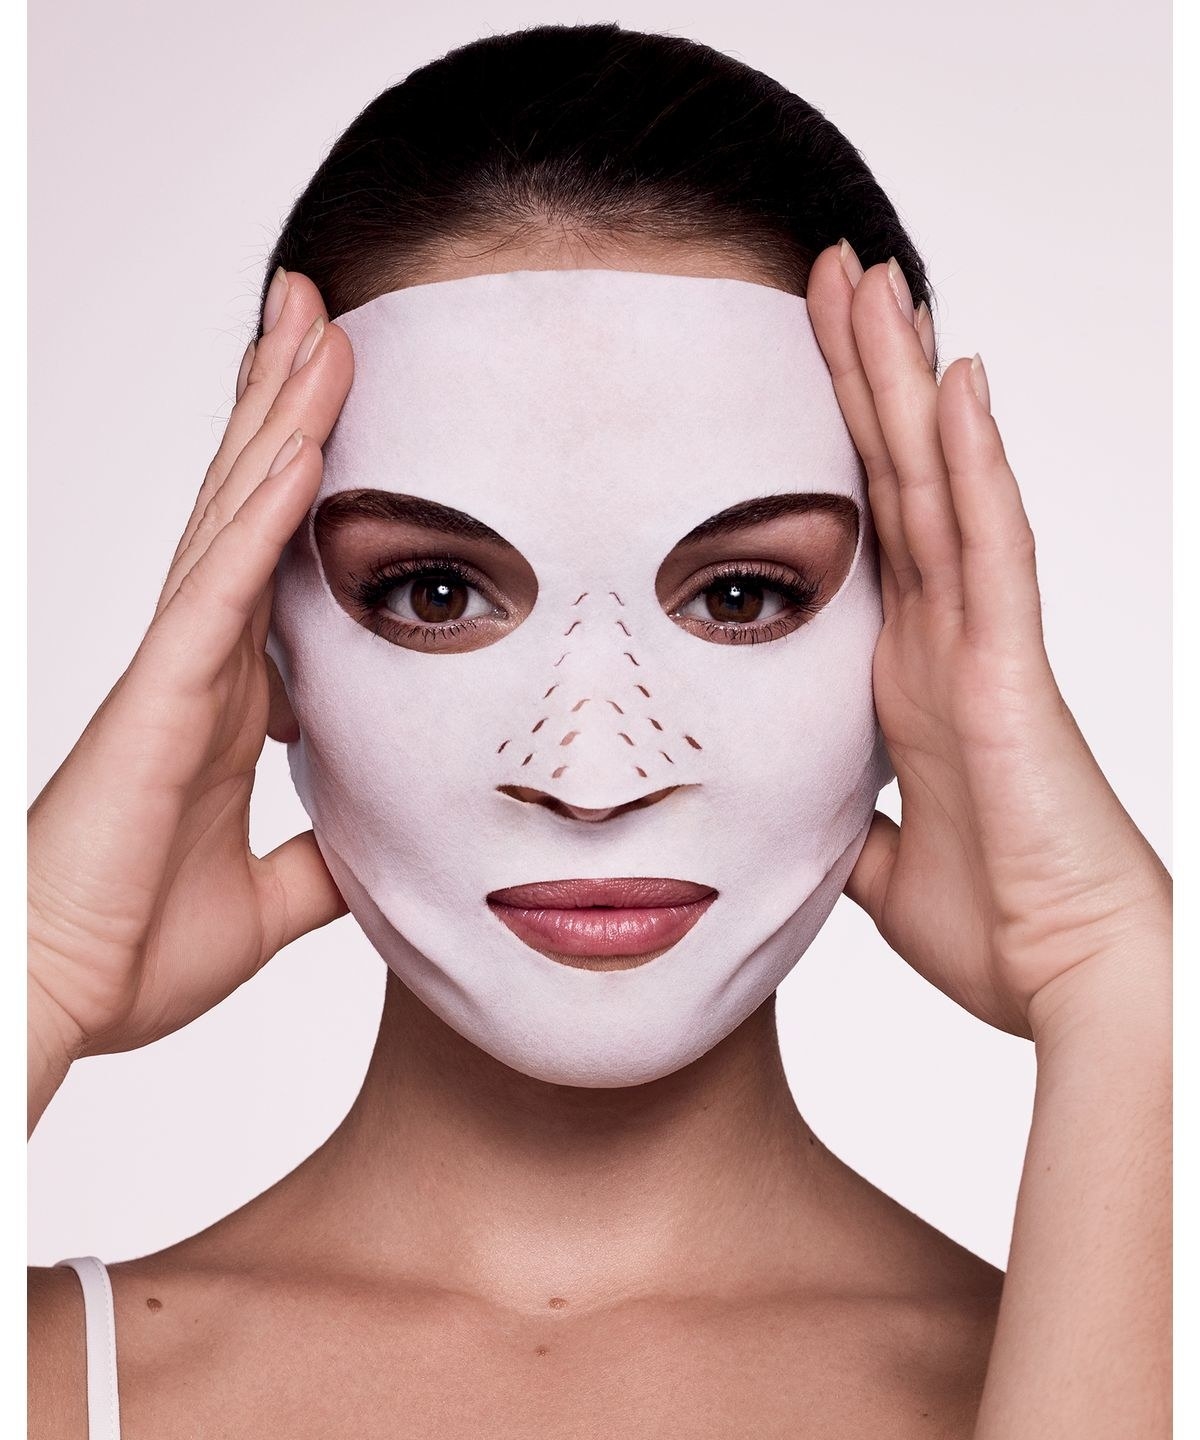 Маски для лица на валберис. Маска для лица. М̆̈ӑ̈с̆̈к̆̈й̈ д̆̈л̆̈я̆̈ л̆̈й̈ц̆̈ӑ̈. Женщина в маске для лица. Тканевые маски для лица.